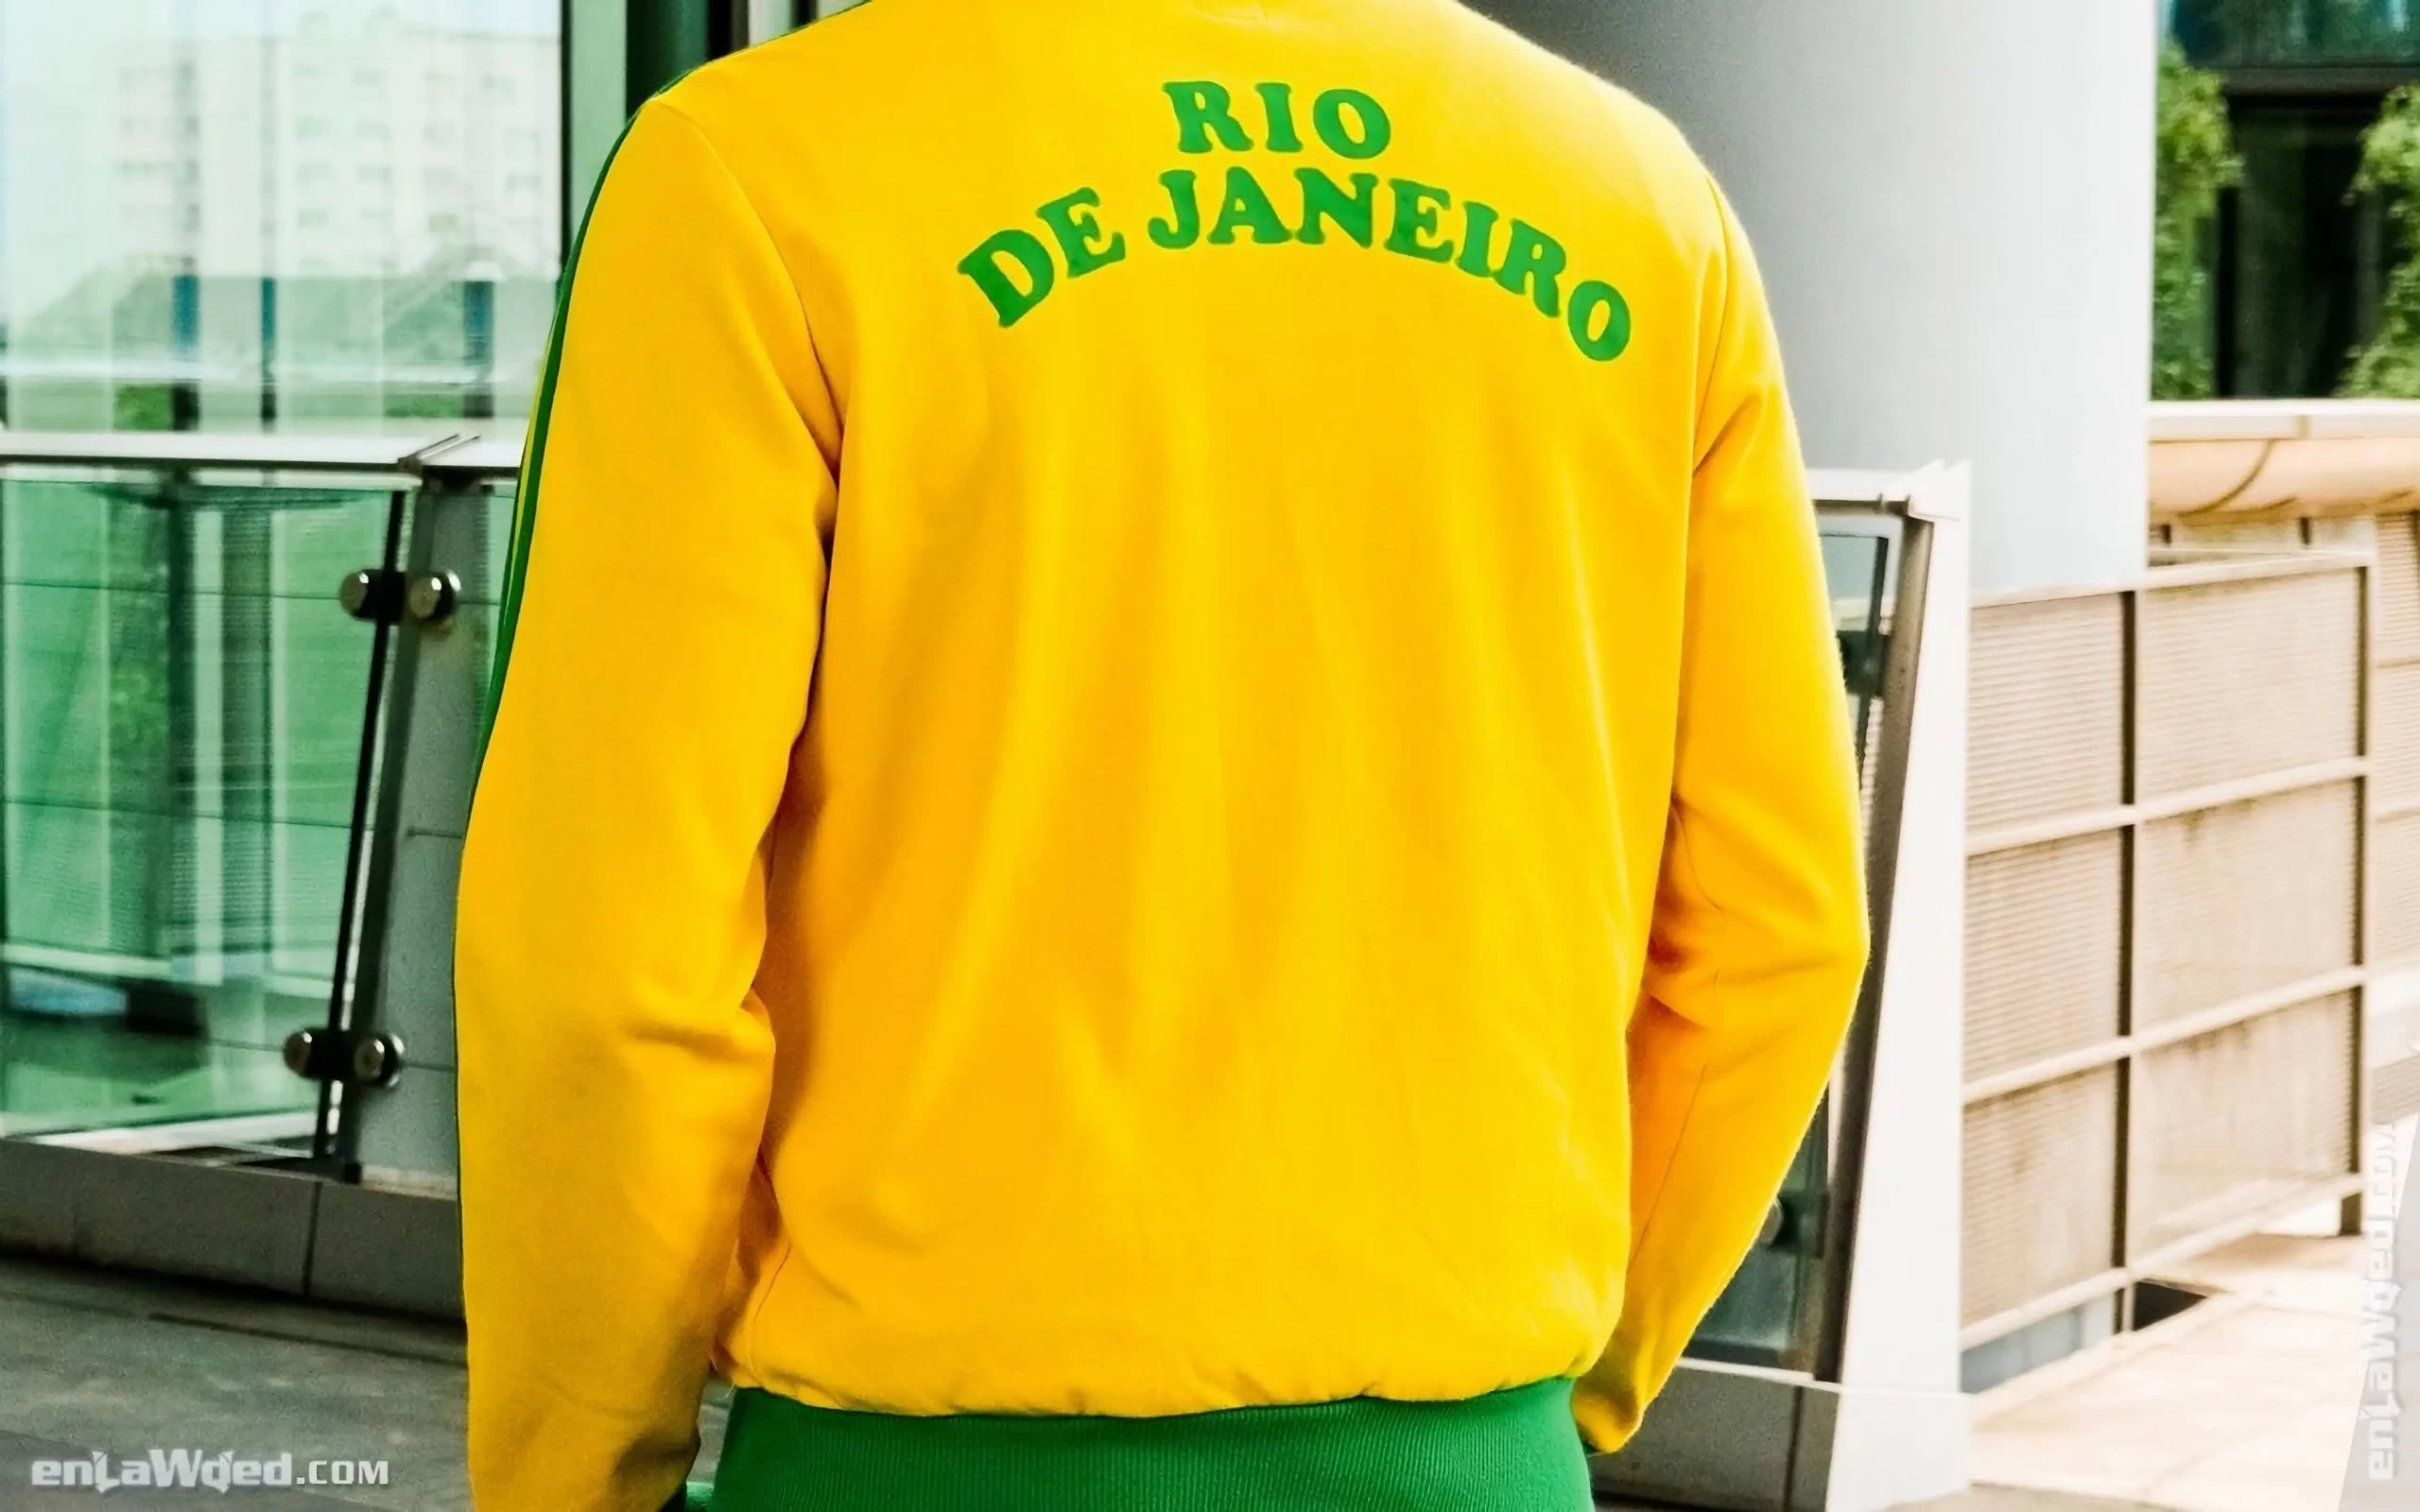 Men’s 2006 Rio de Janeiro TT-Two by Adidas Originals: Tremendous (EnLawded.com file #lmchk90419ip2y122341kg9st)